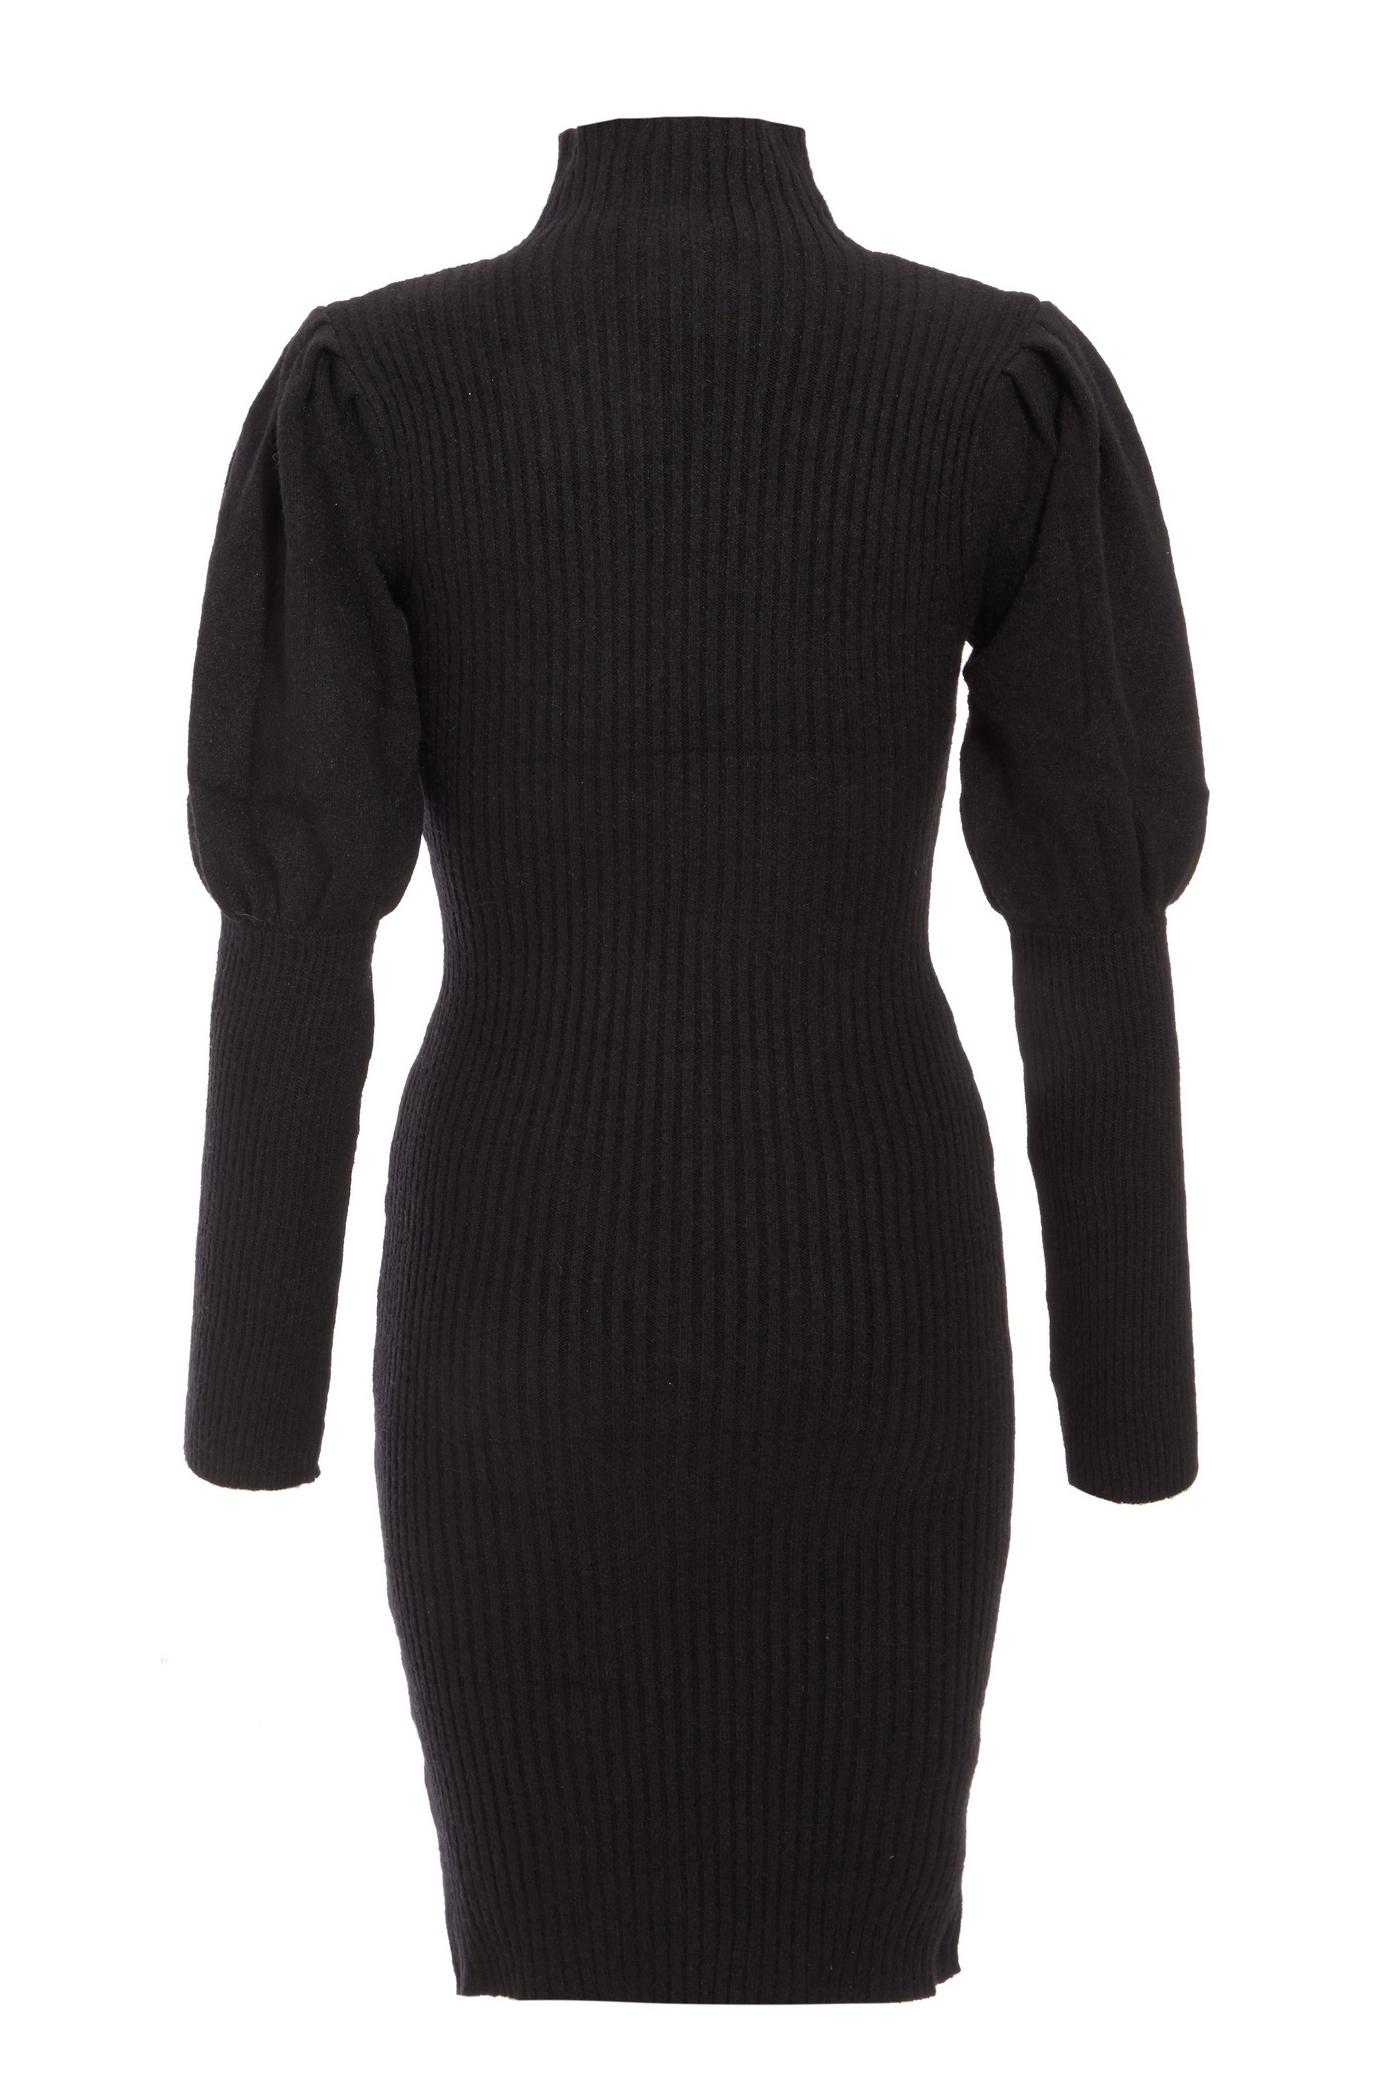 Black Puff Sleeve Knitted Jumper Dress